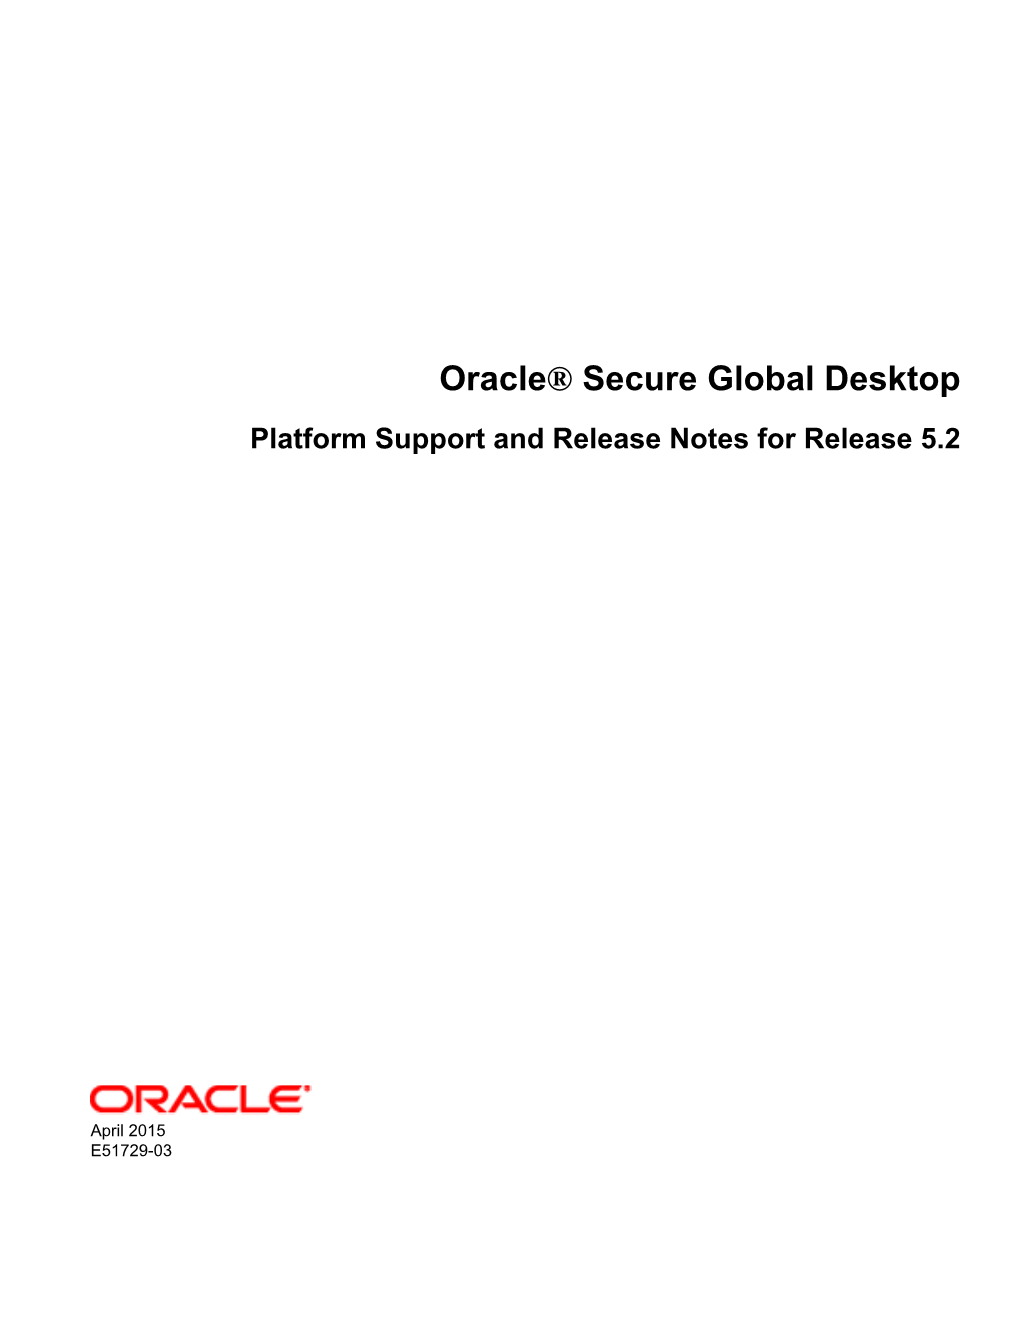 Oracle® Secure Global Desktop Platform Support and Release Notes for Release 5.2